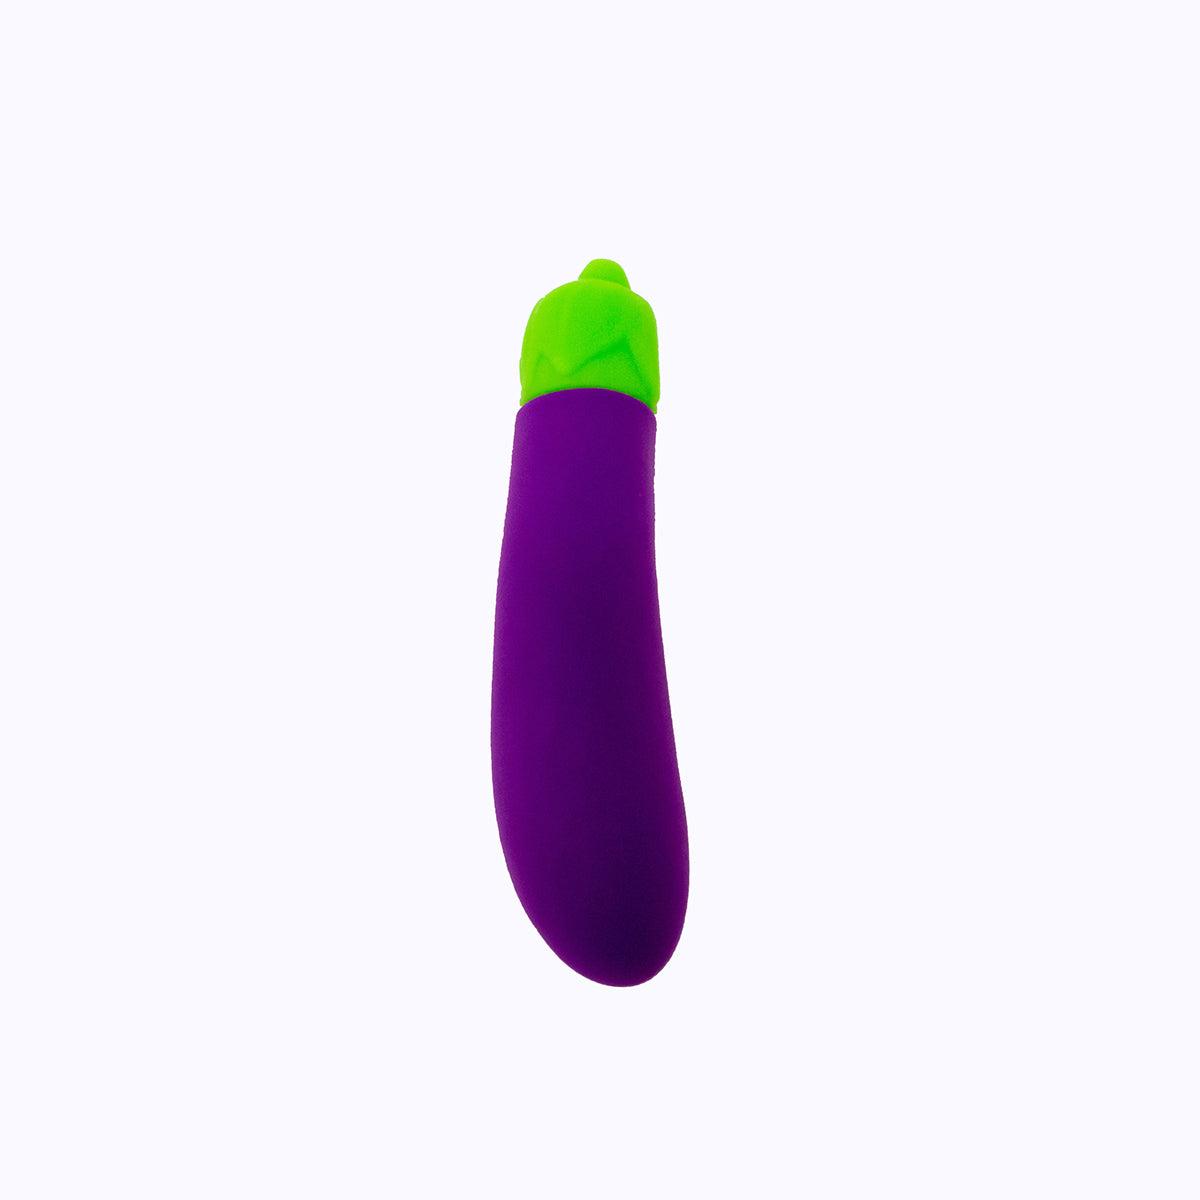 Emojibator Eggplant Vibe - shop enby